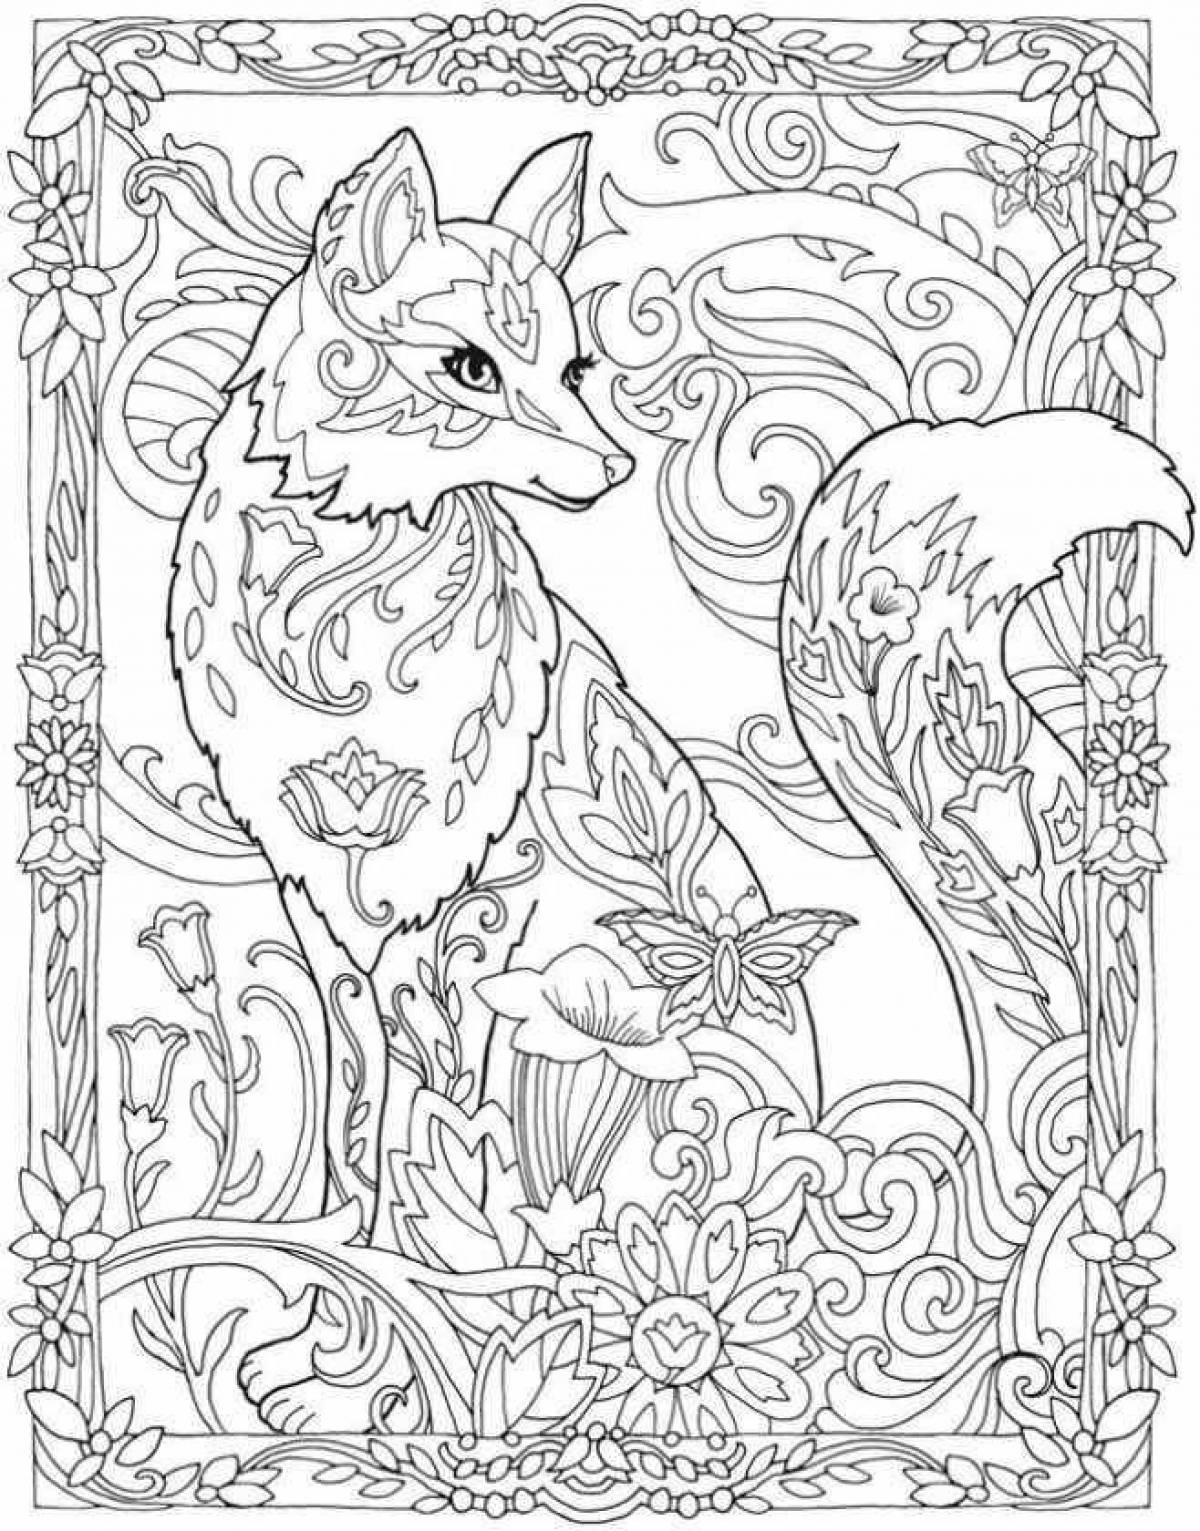 Shiny anti-stress fox coloring book